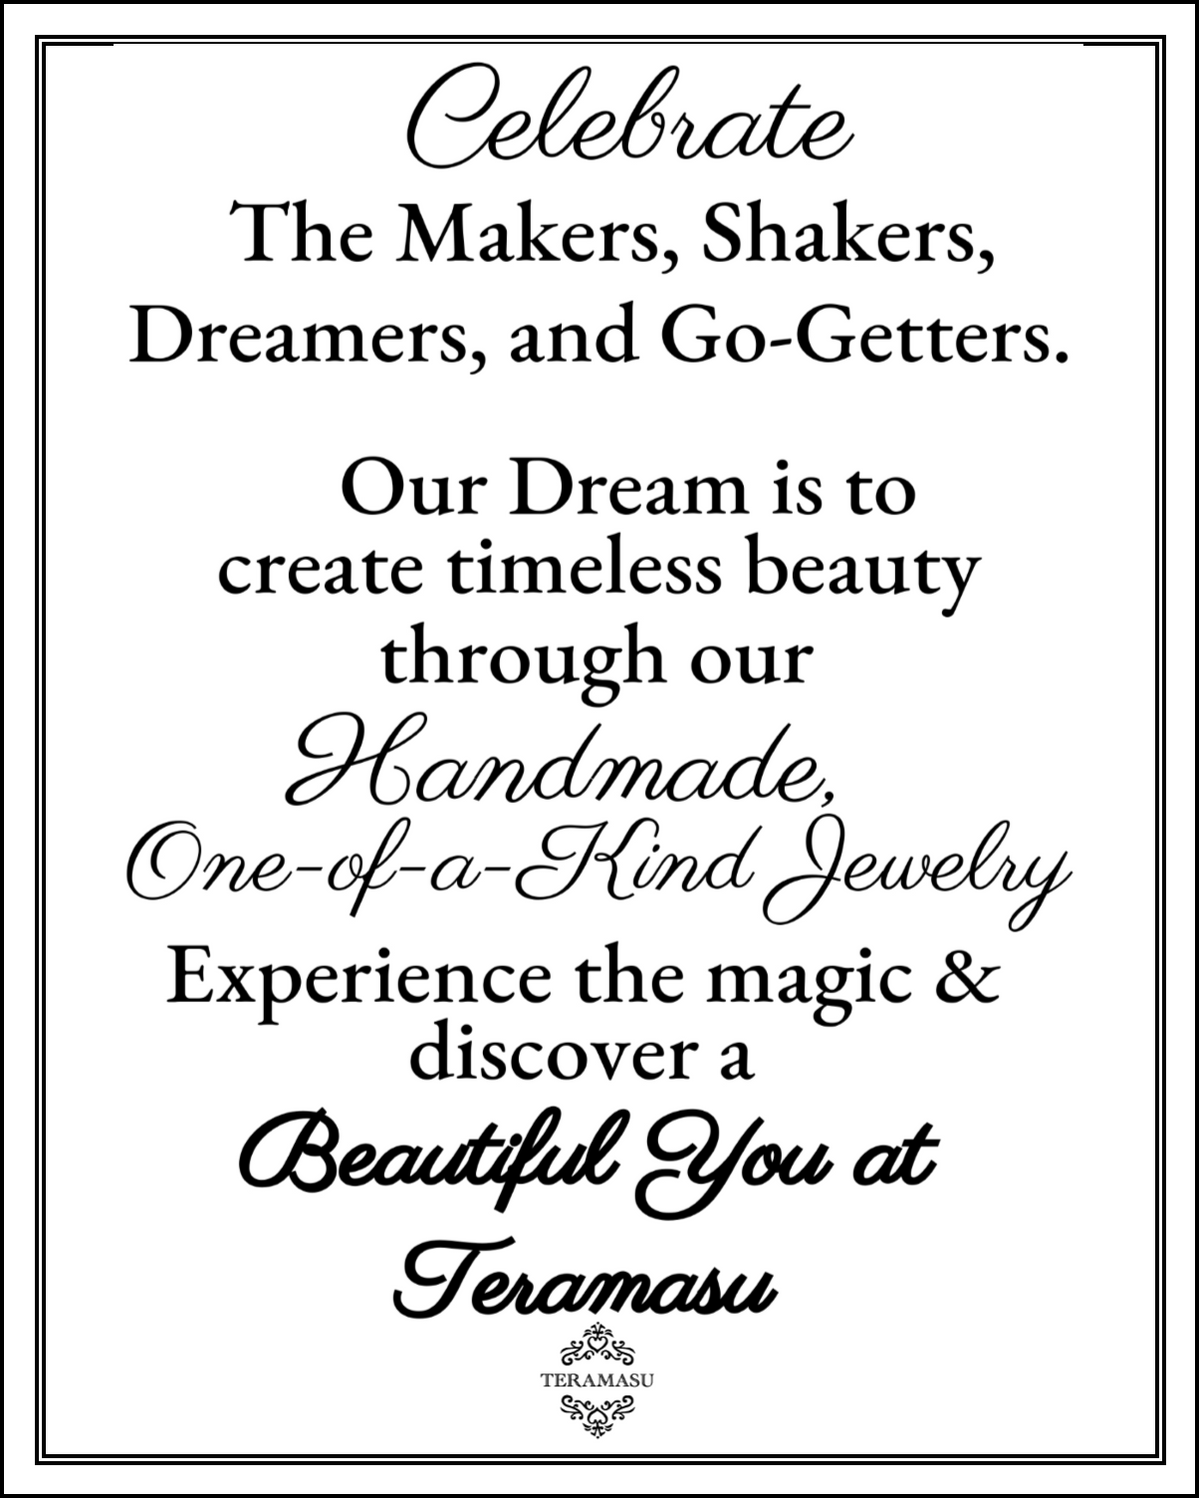 Celebrate the Makers & Discover a Beautiful You at Teramasu!